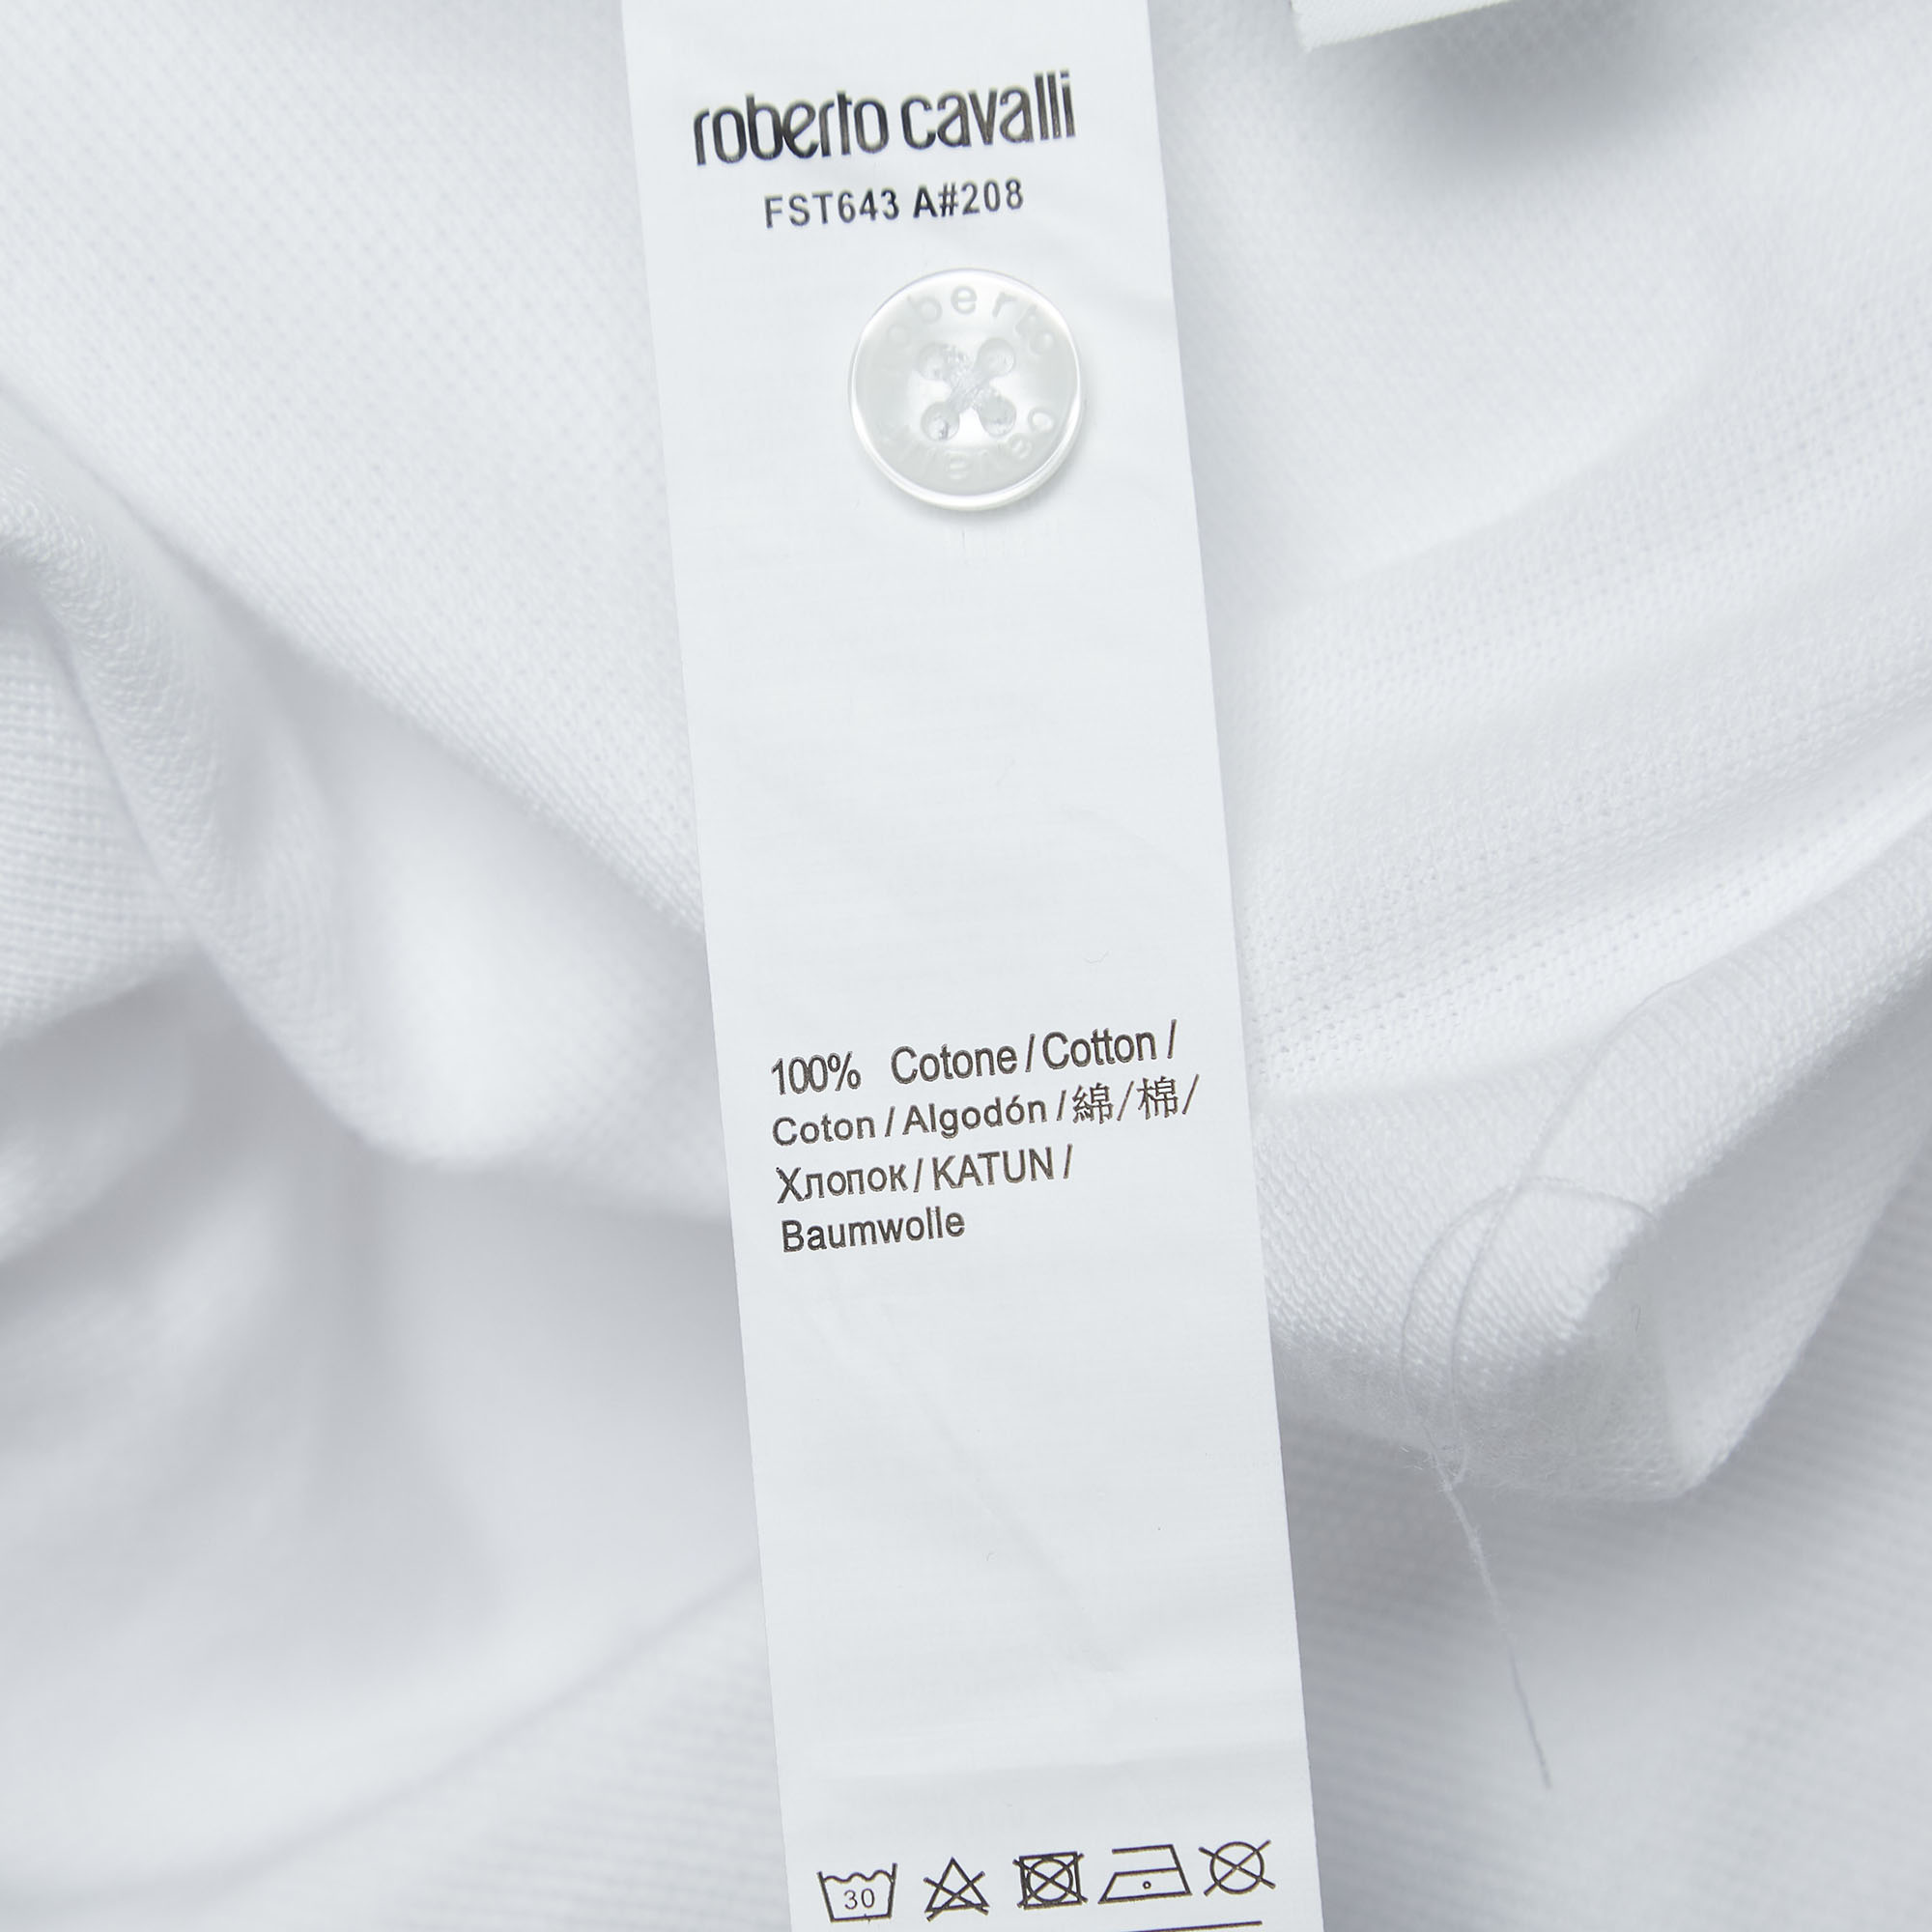 Roberto Cavalli White Logo Embroidered Cotton Pique Polo T-Shirt L